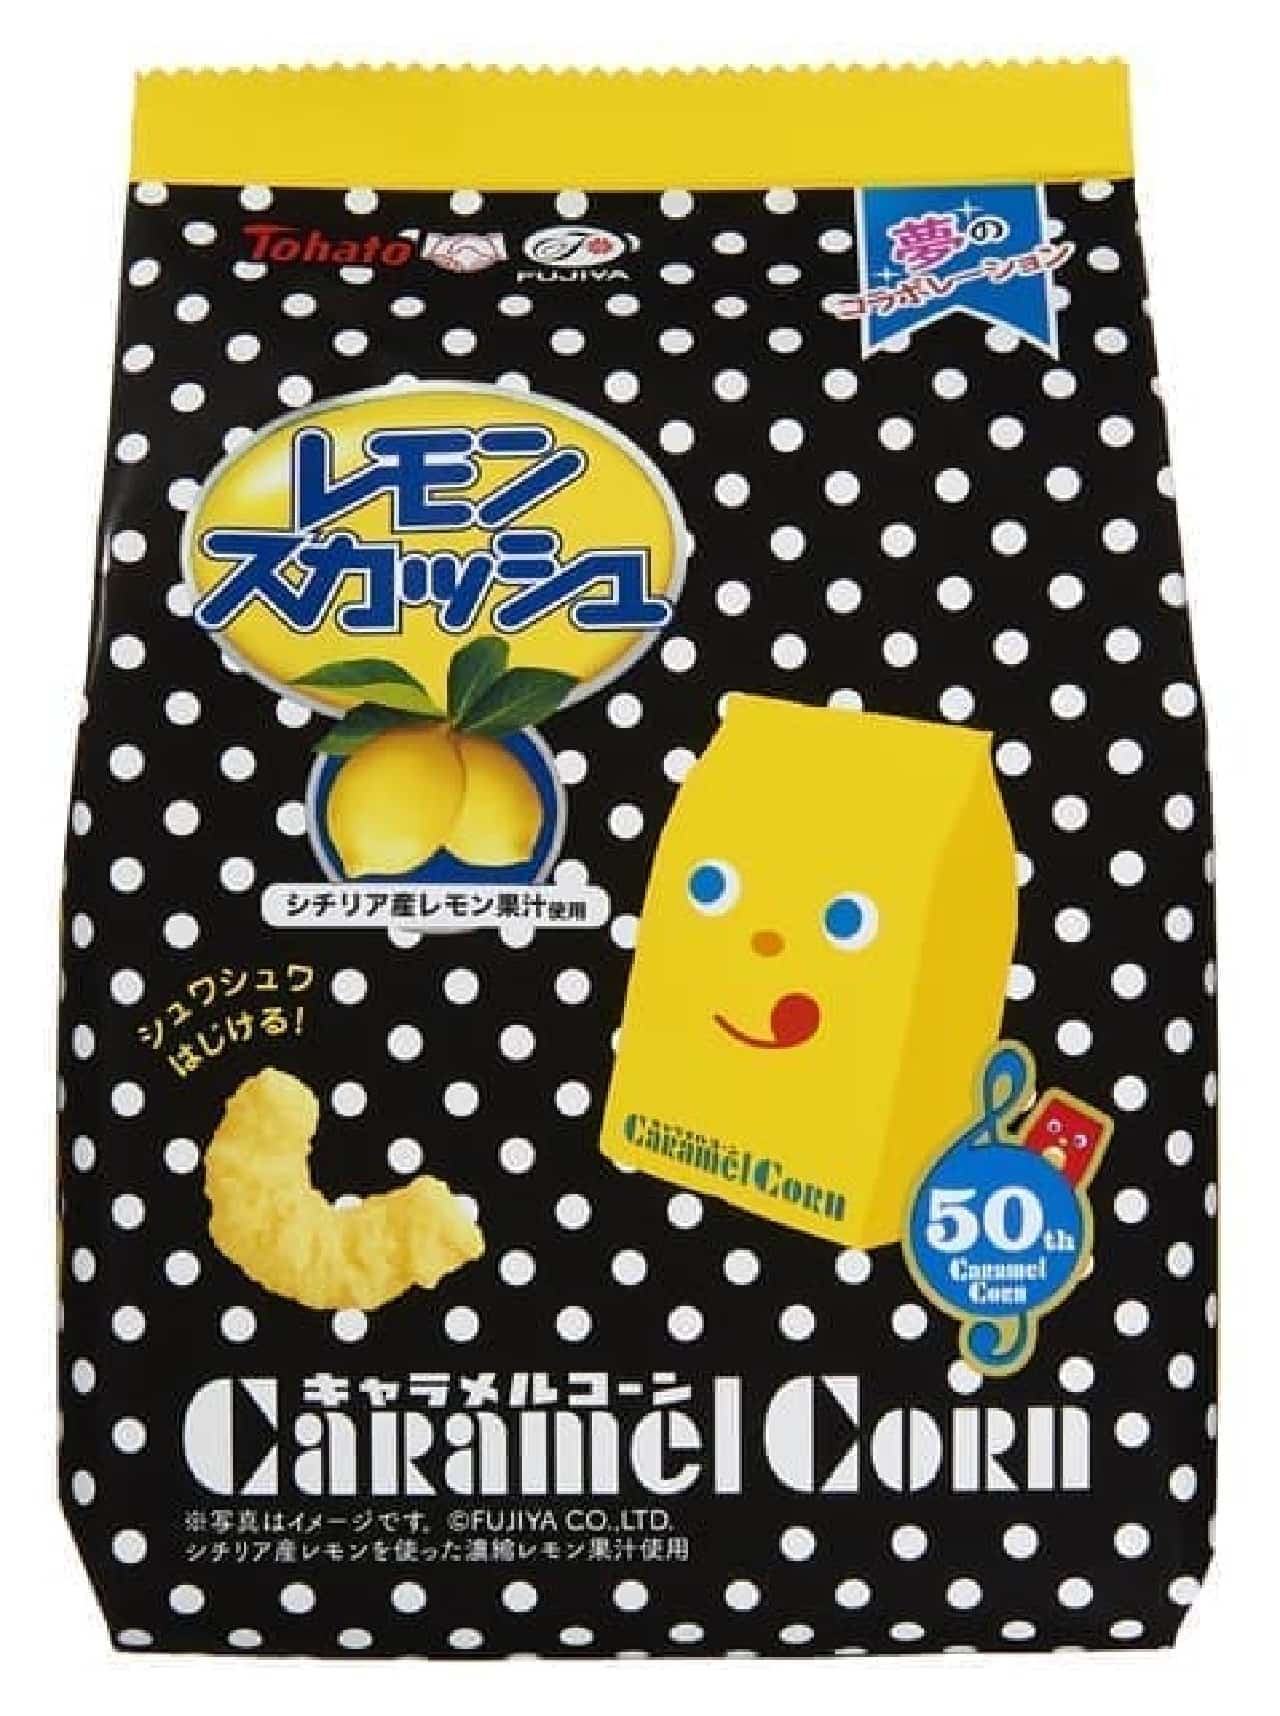 Collaboration product of Tohato and Fujiya "Caramel corn lemon squash taste"